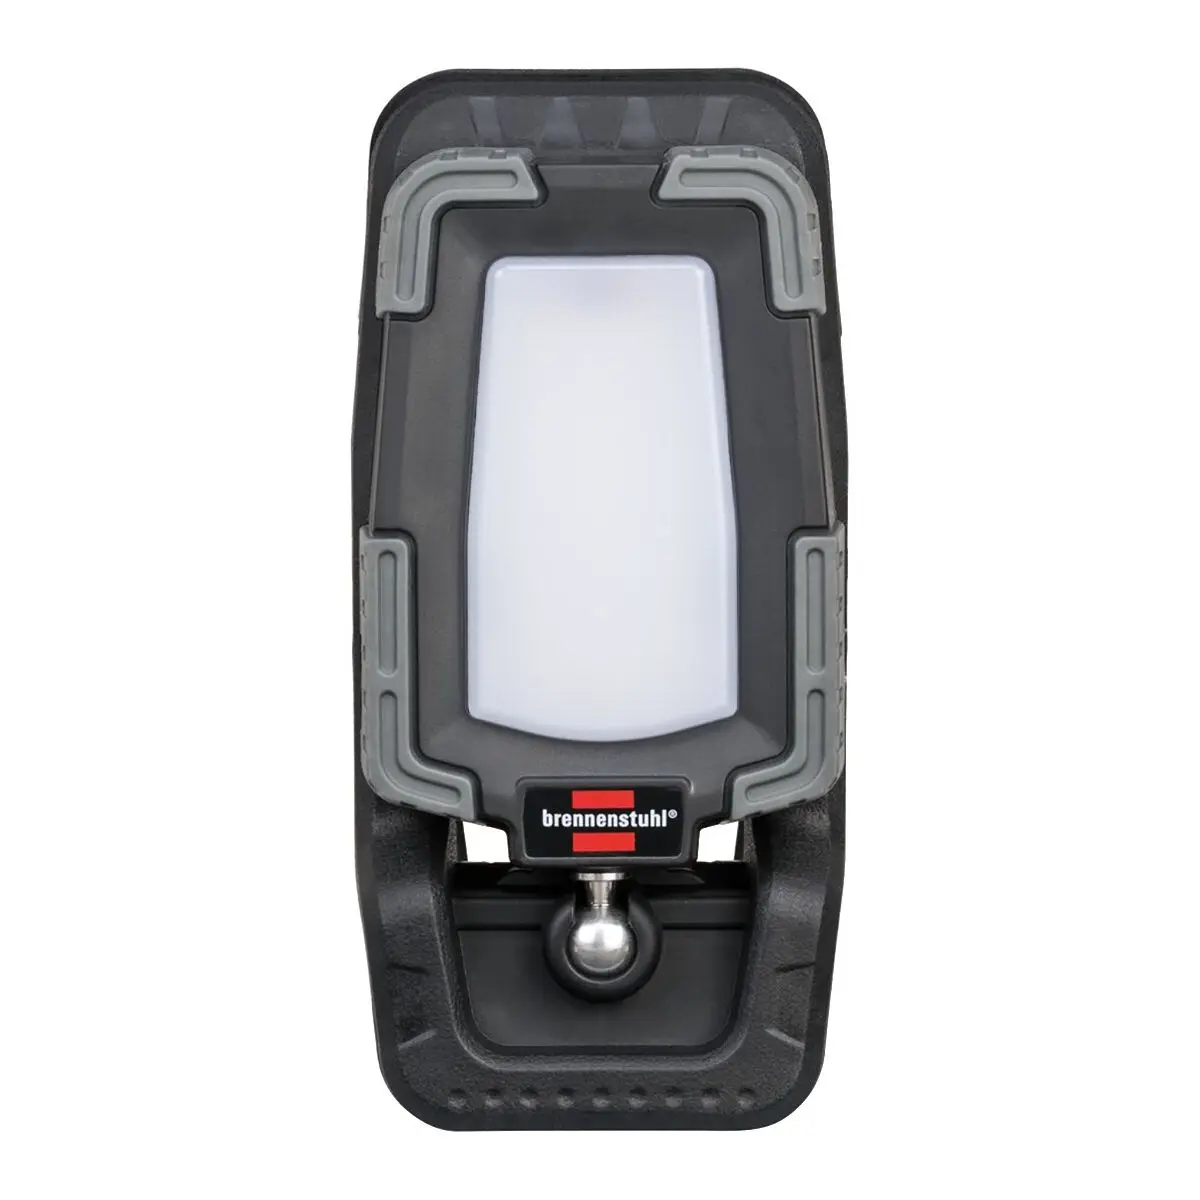 Spot LED reîncărcabil mobil - CL 1050 MA Clip, 950lm, IP65